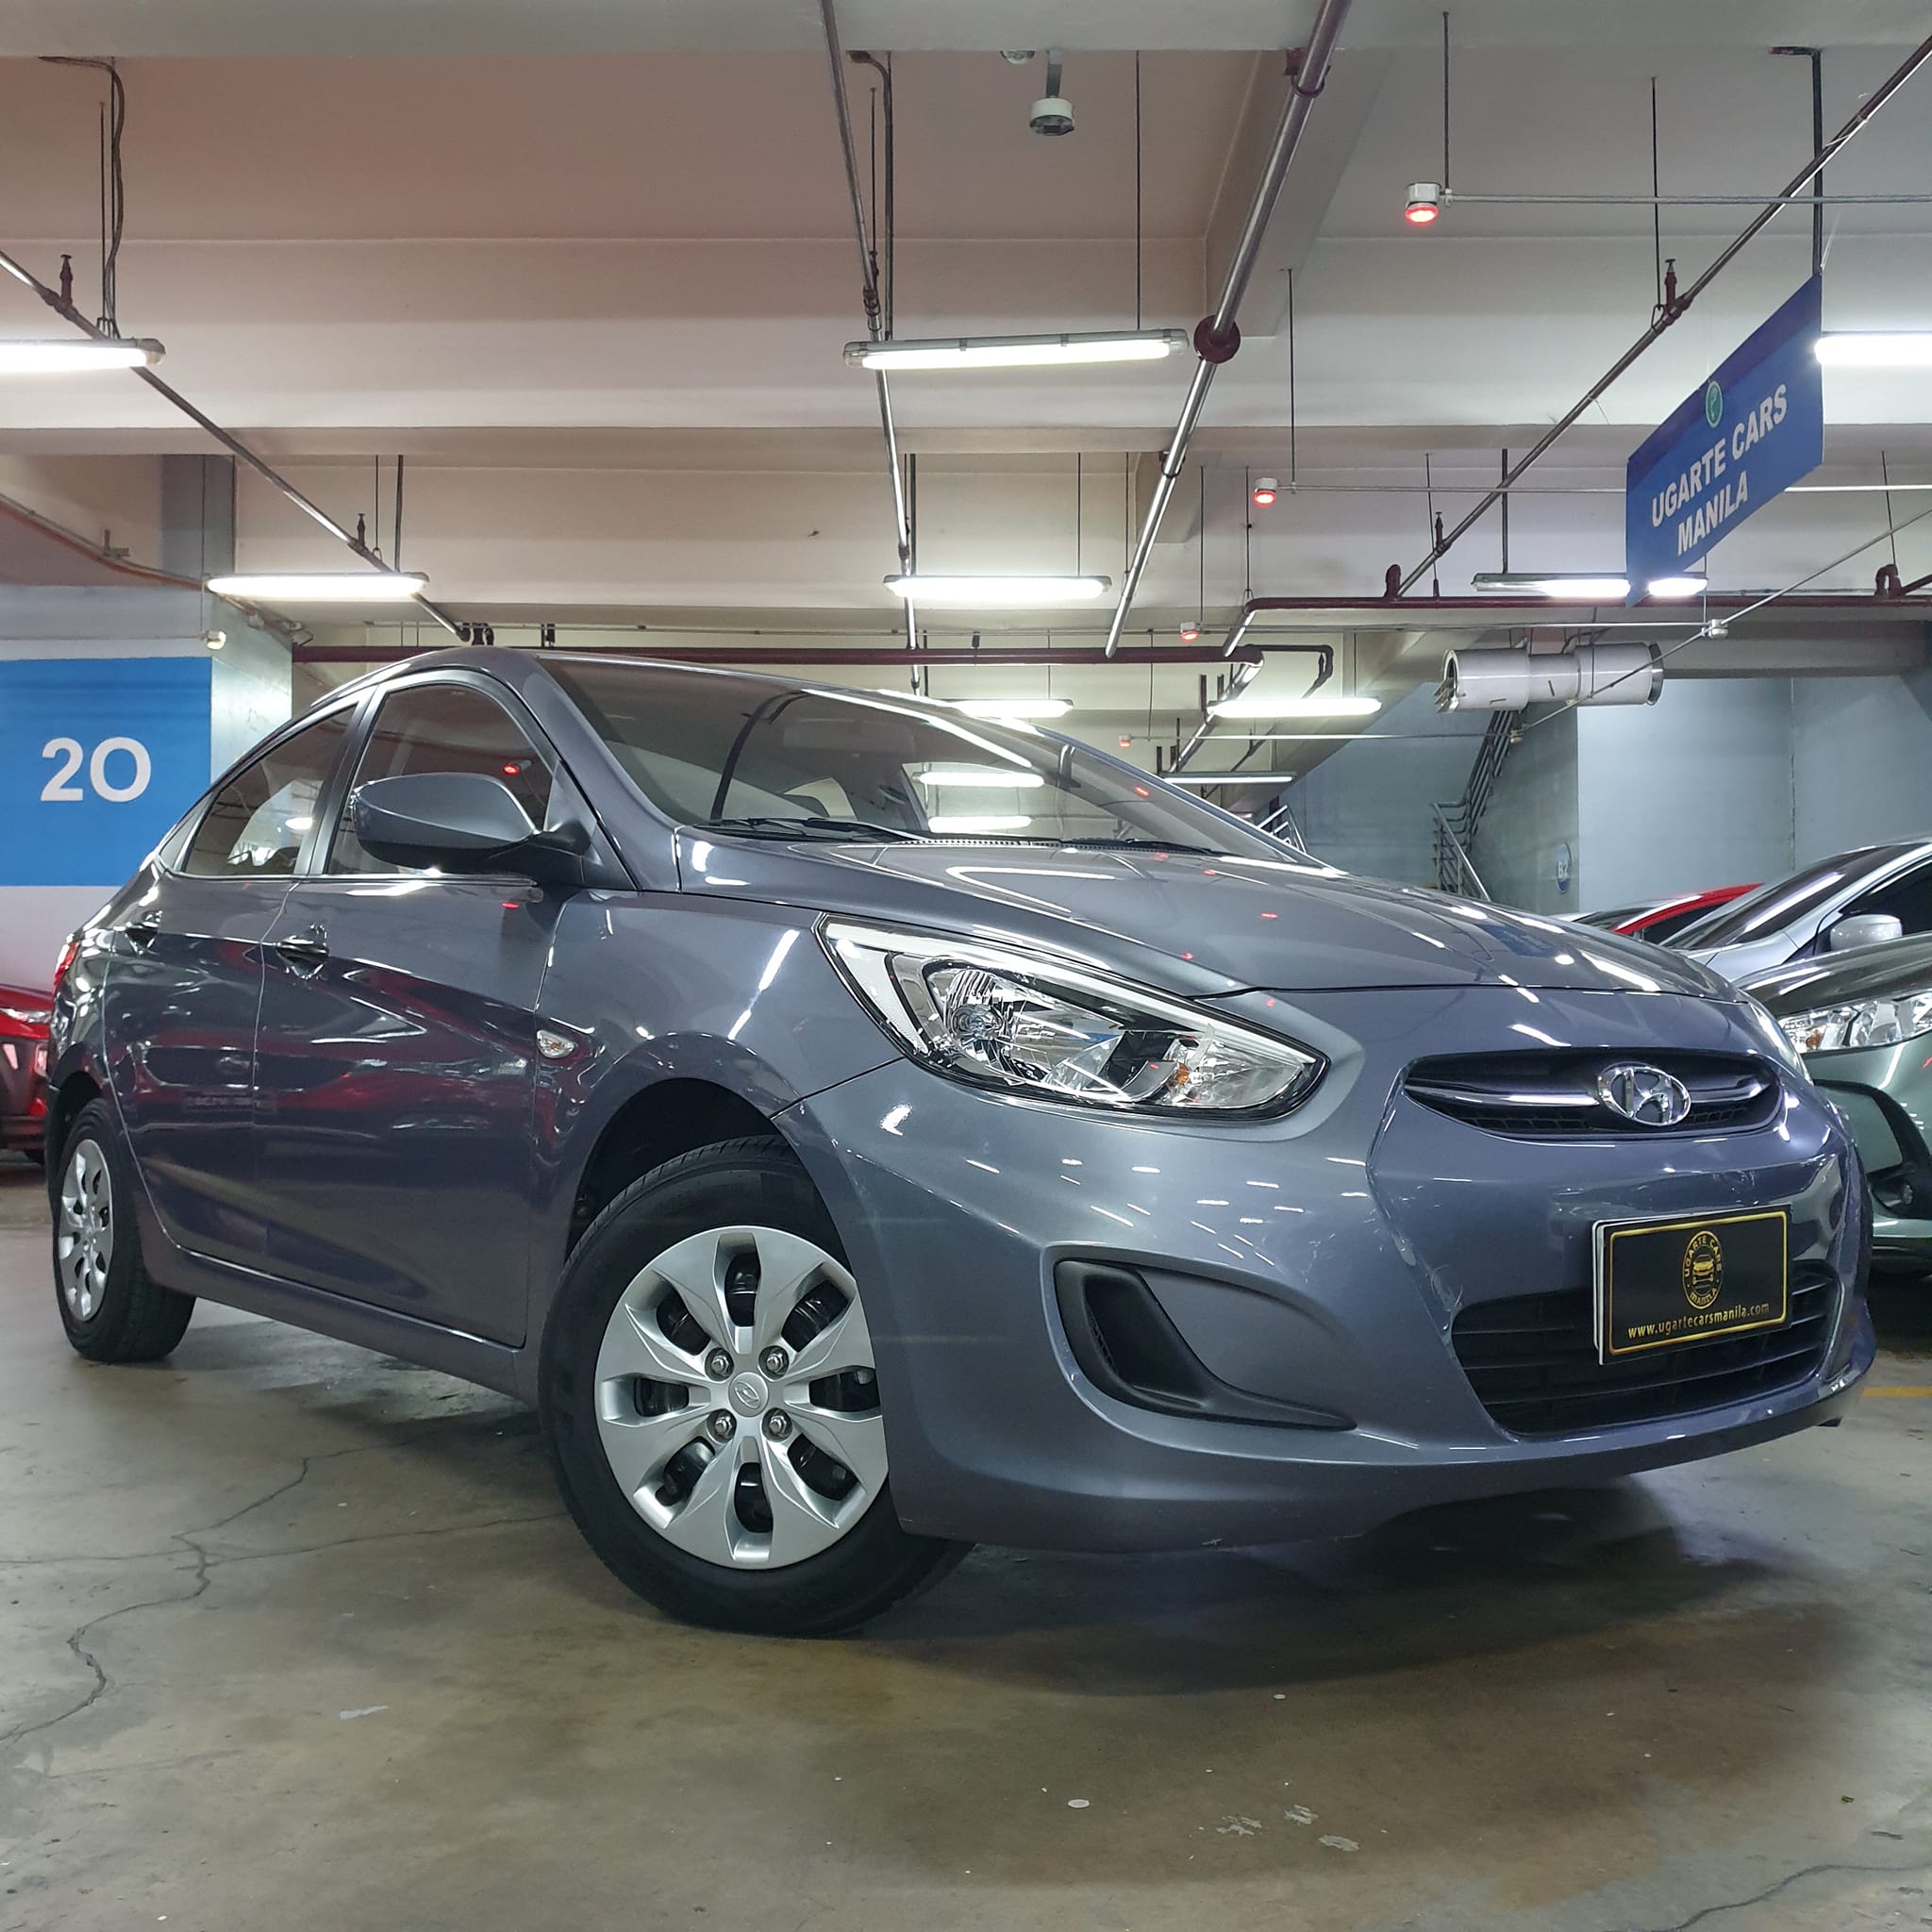 Used 2018 Hyundai Accent 1.4 GL 6AT